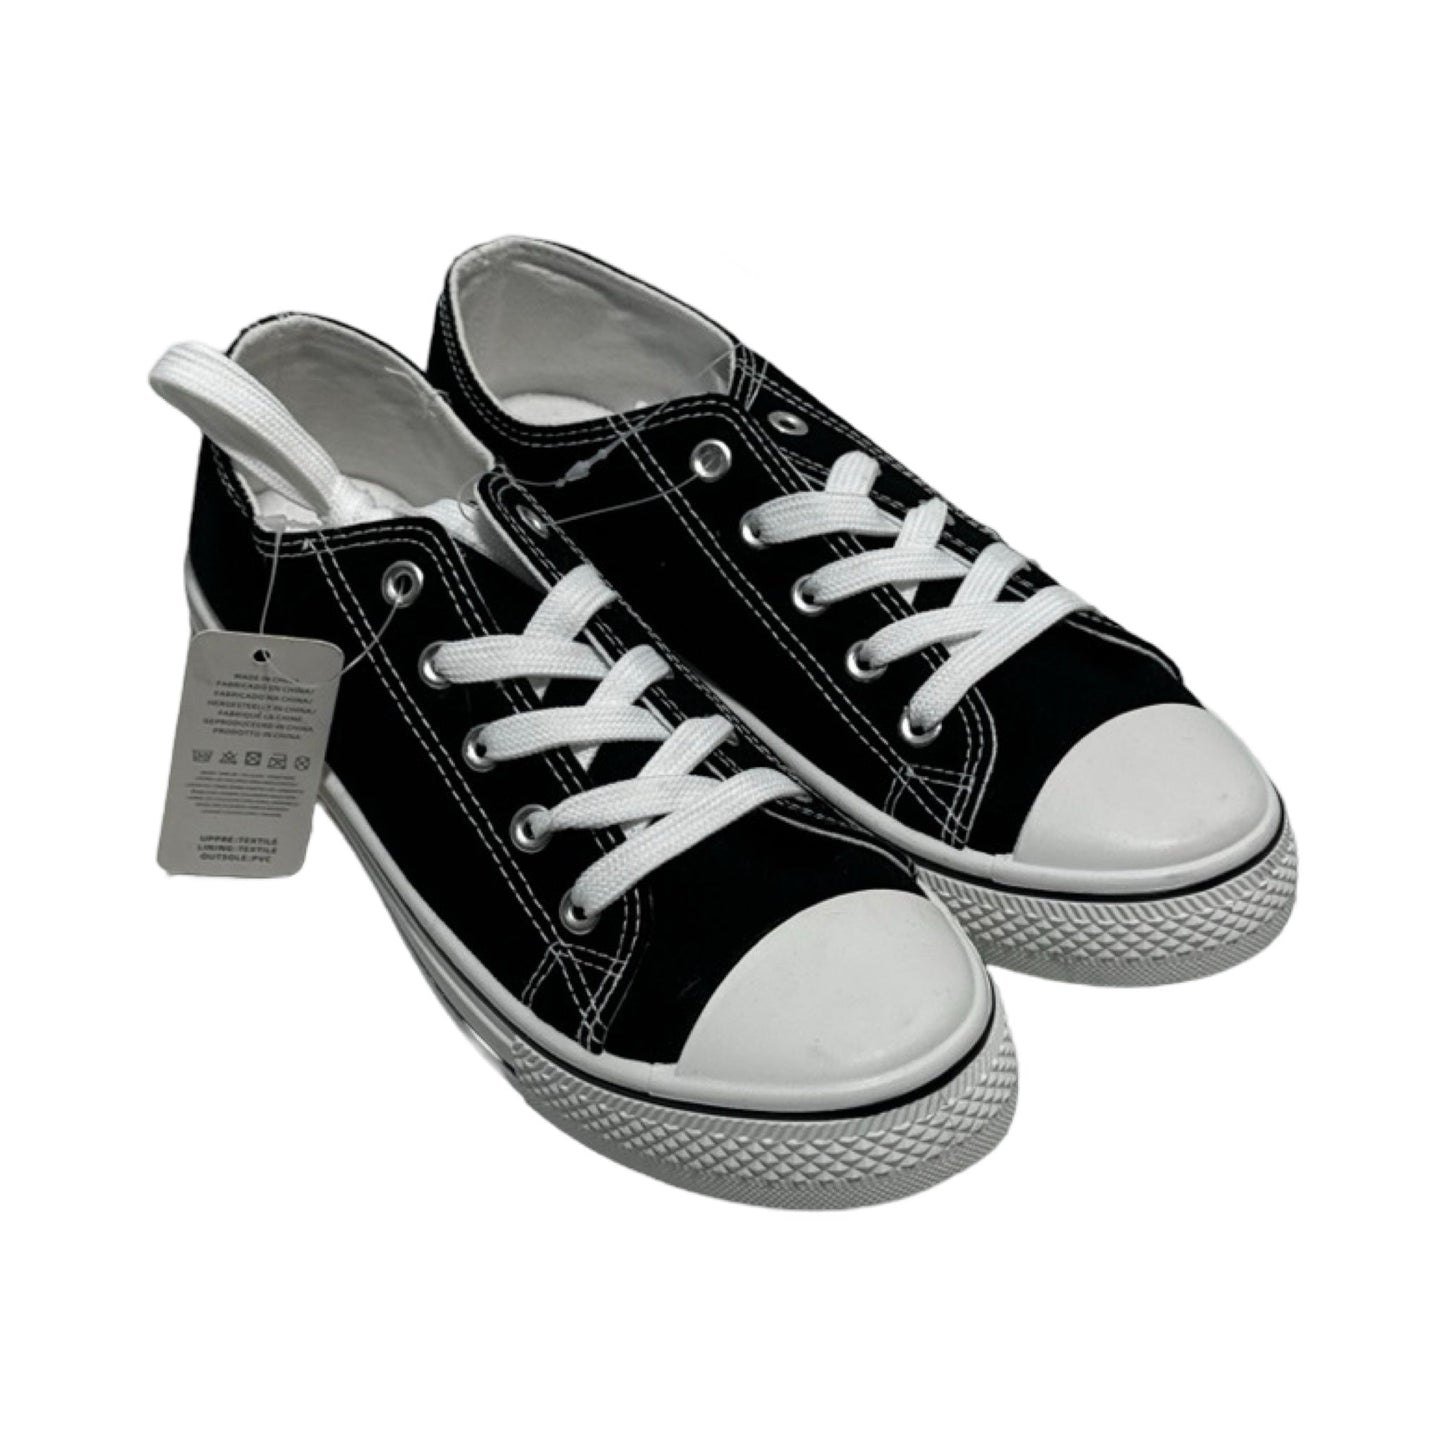 Black & White Shoes Sneakers Josiny, Size 9